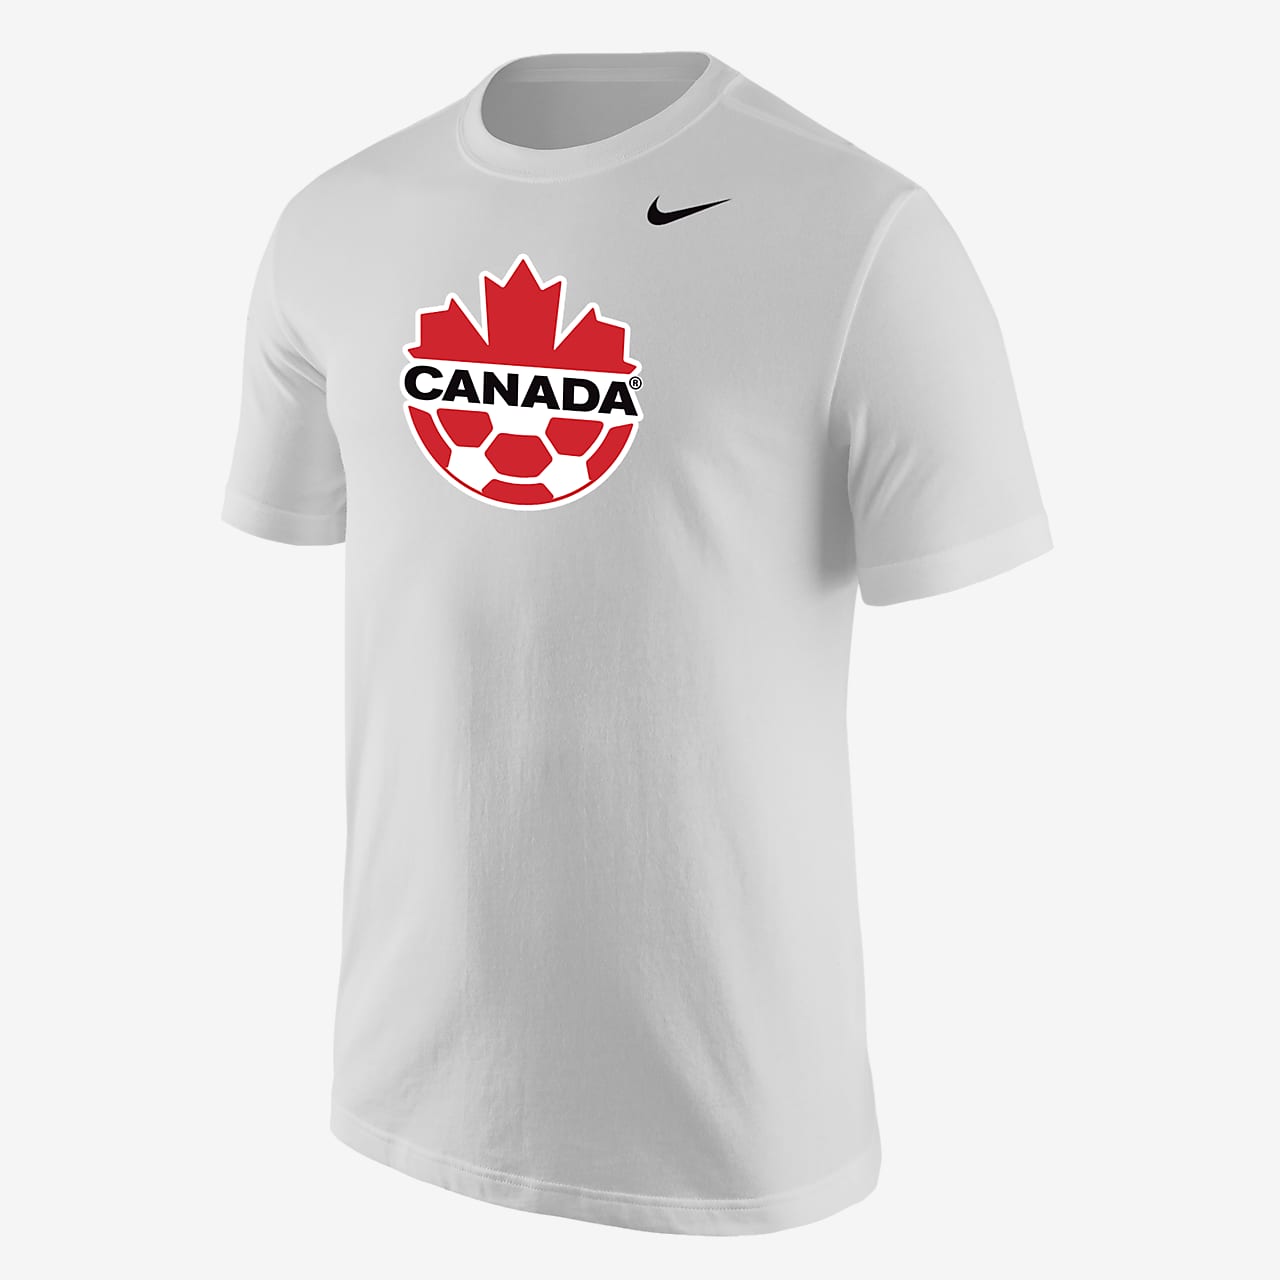 Canada Men's Nike Core Nike.com